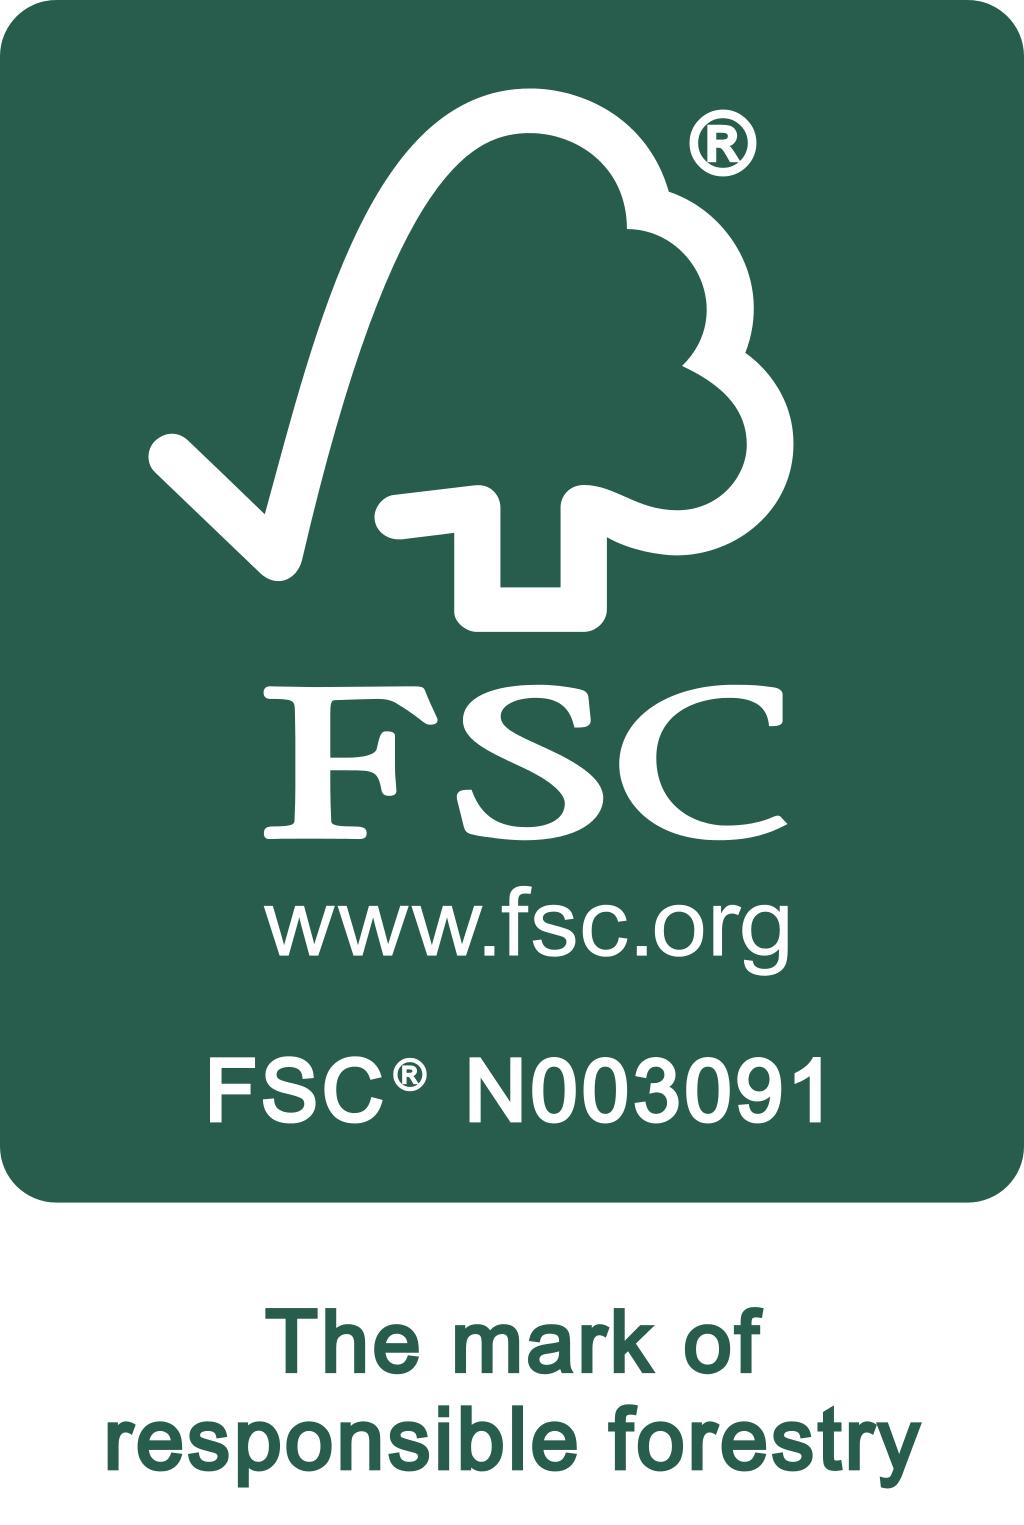 Forest Stewardship Council® (FSC) responsible forest management standard